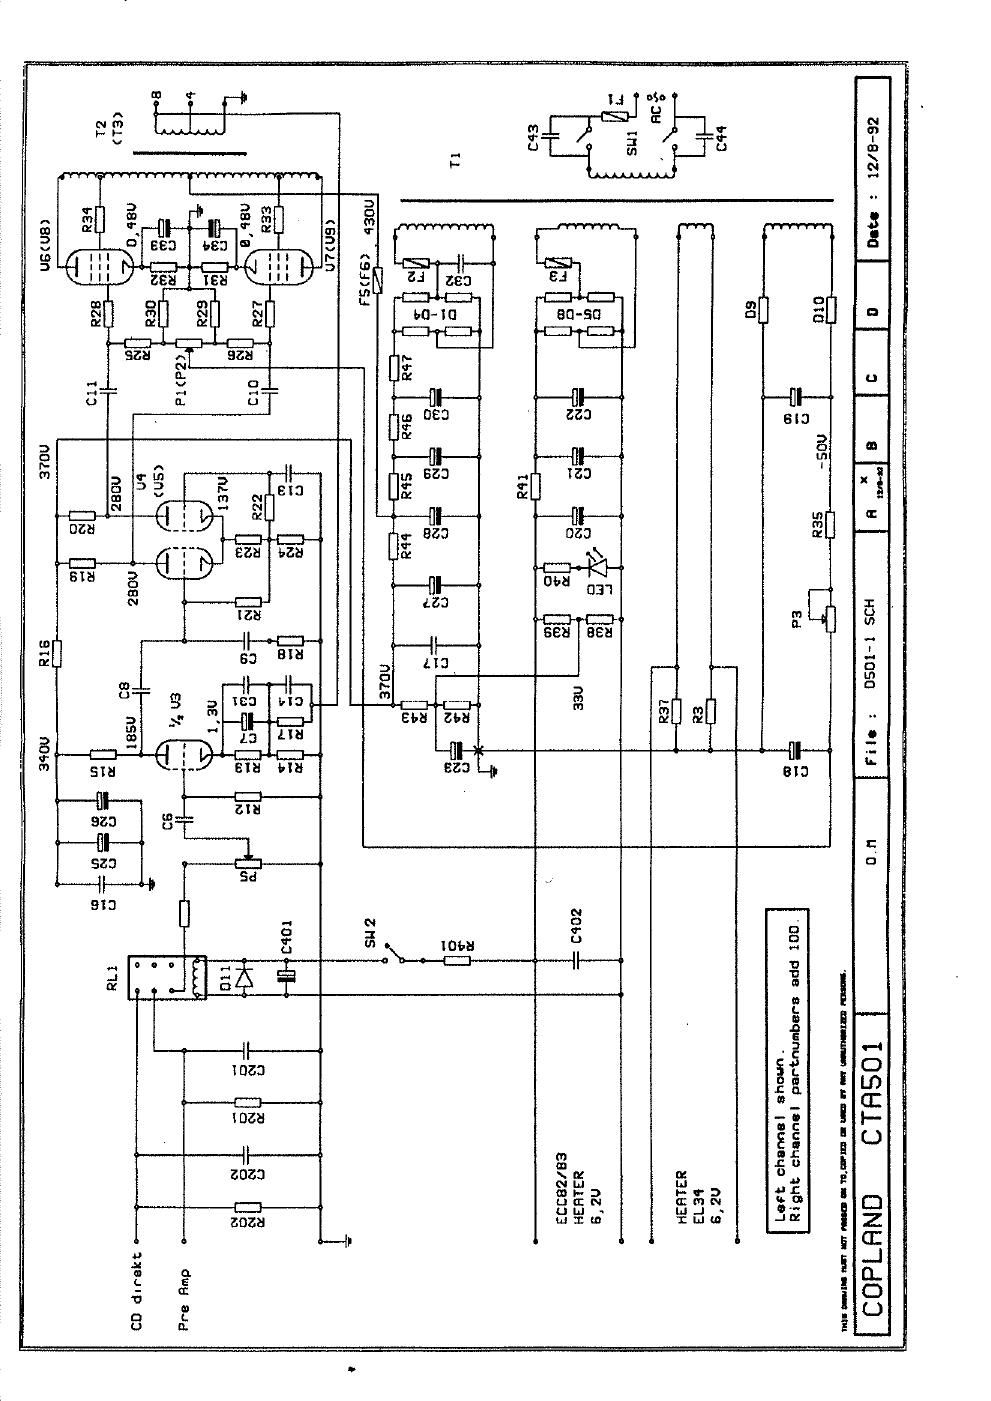 copland cta 501 schematic